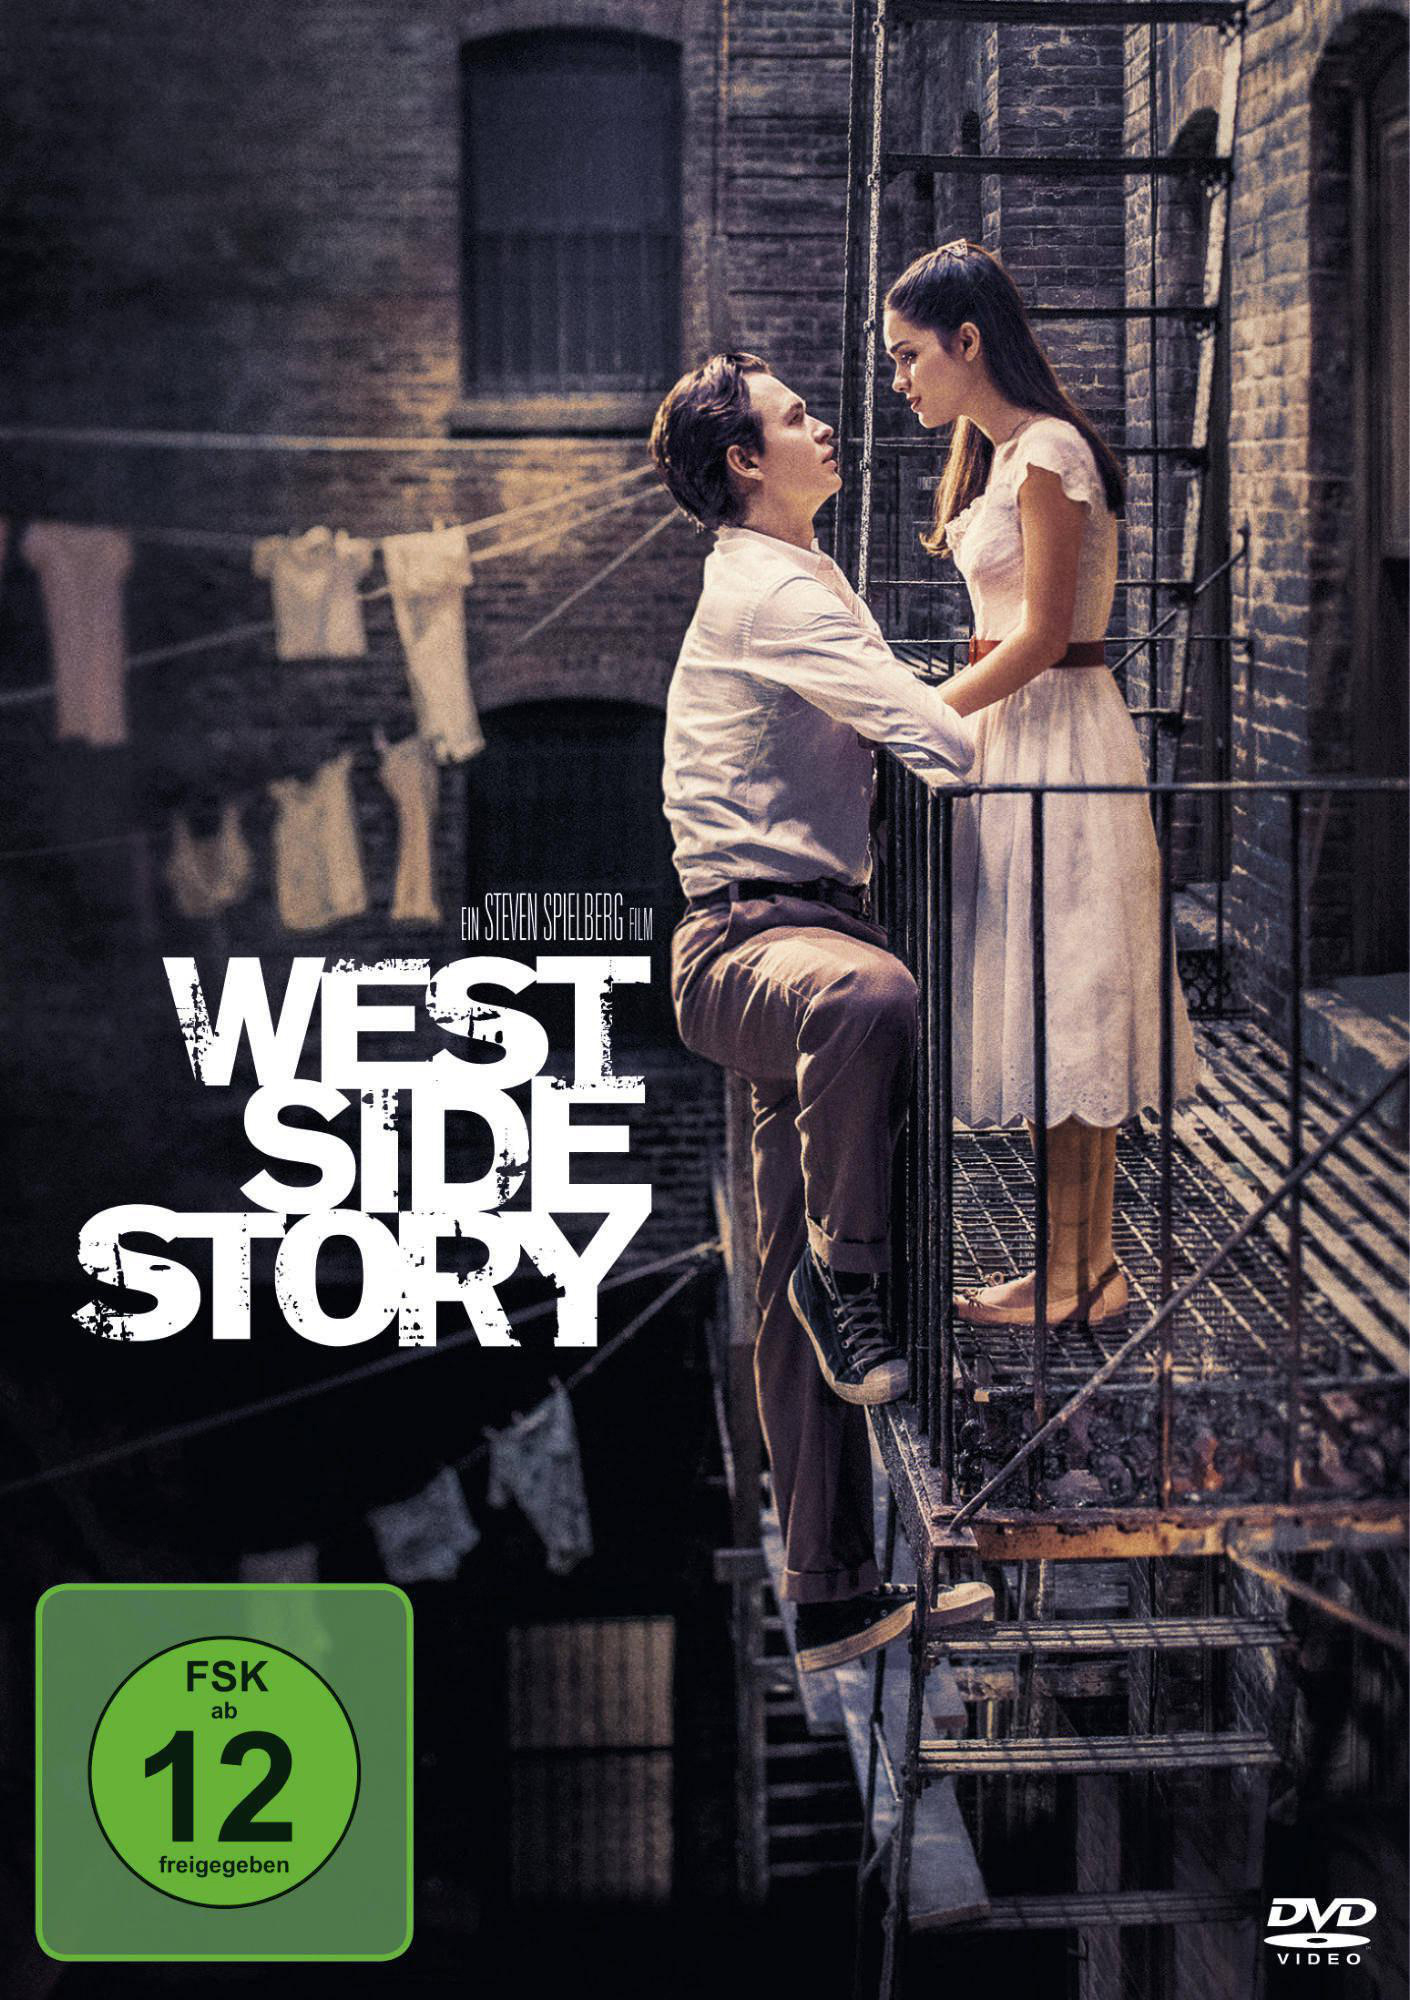 West DVD Story Side